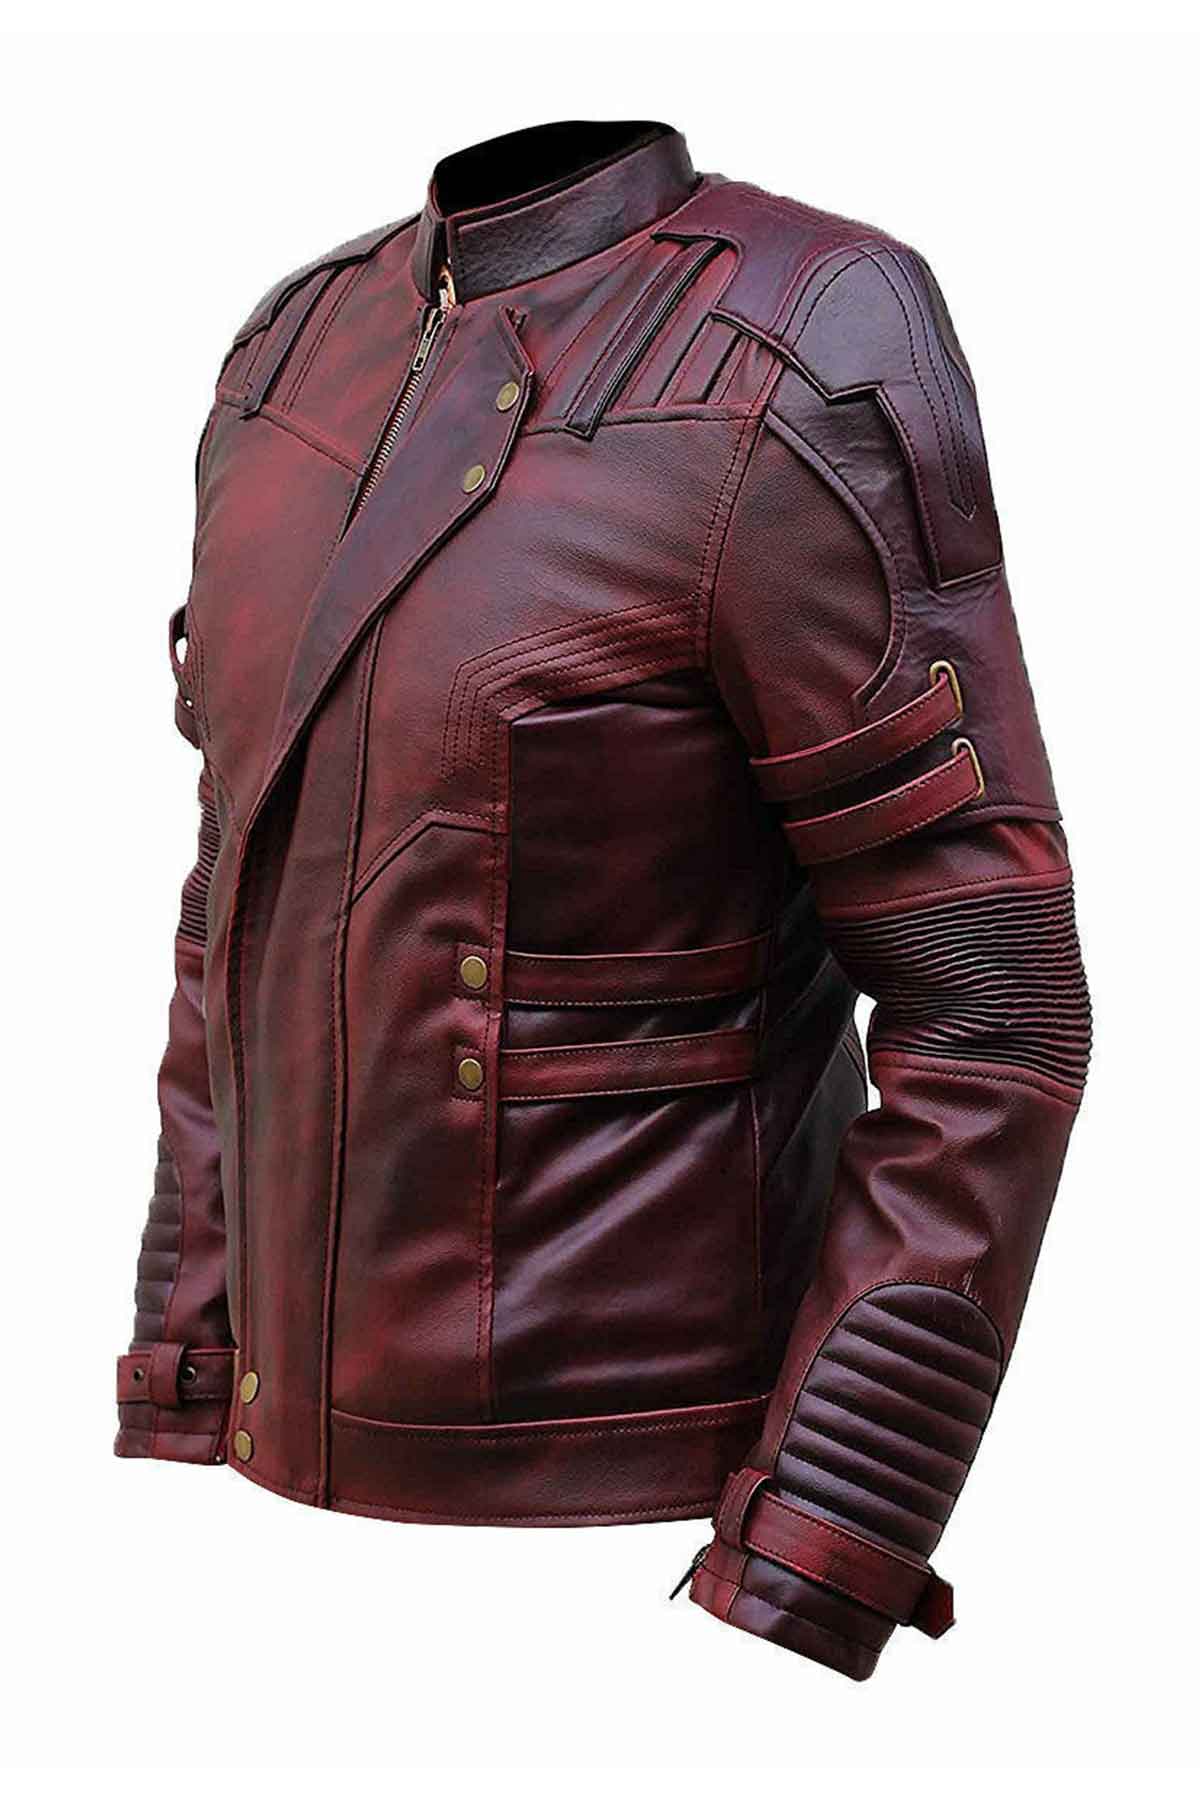 Star Wars Chris Pratt Jacket of Guardians of the Galaxy Vol. 2